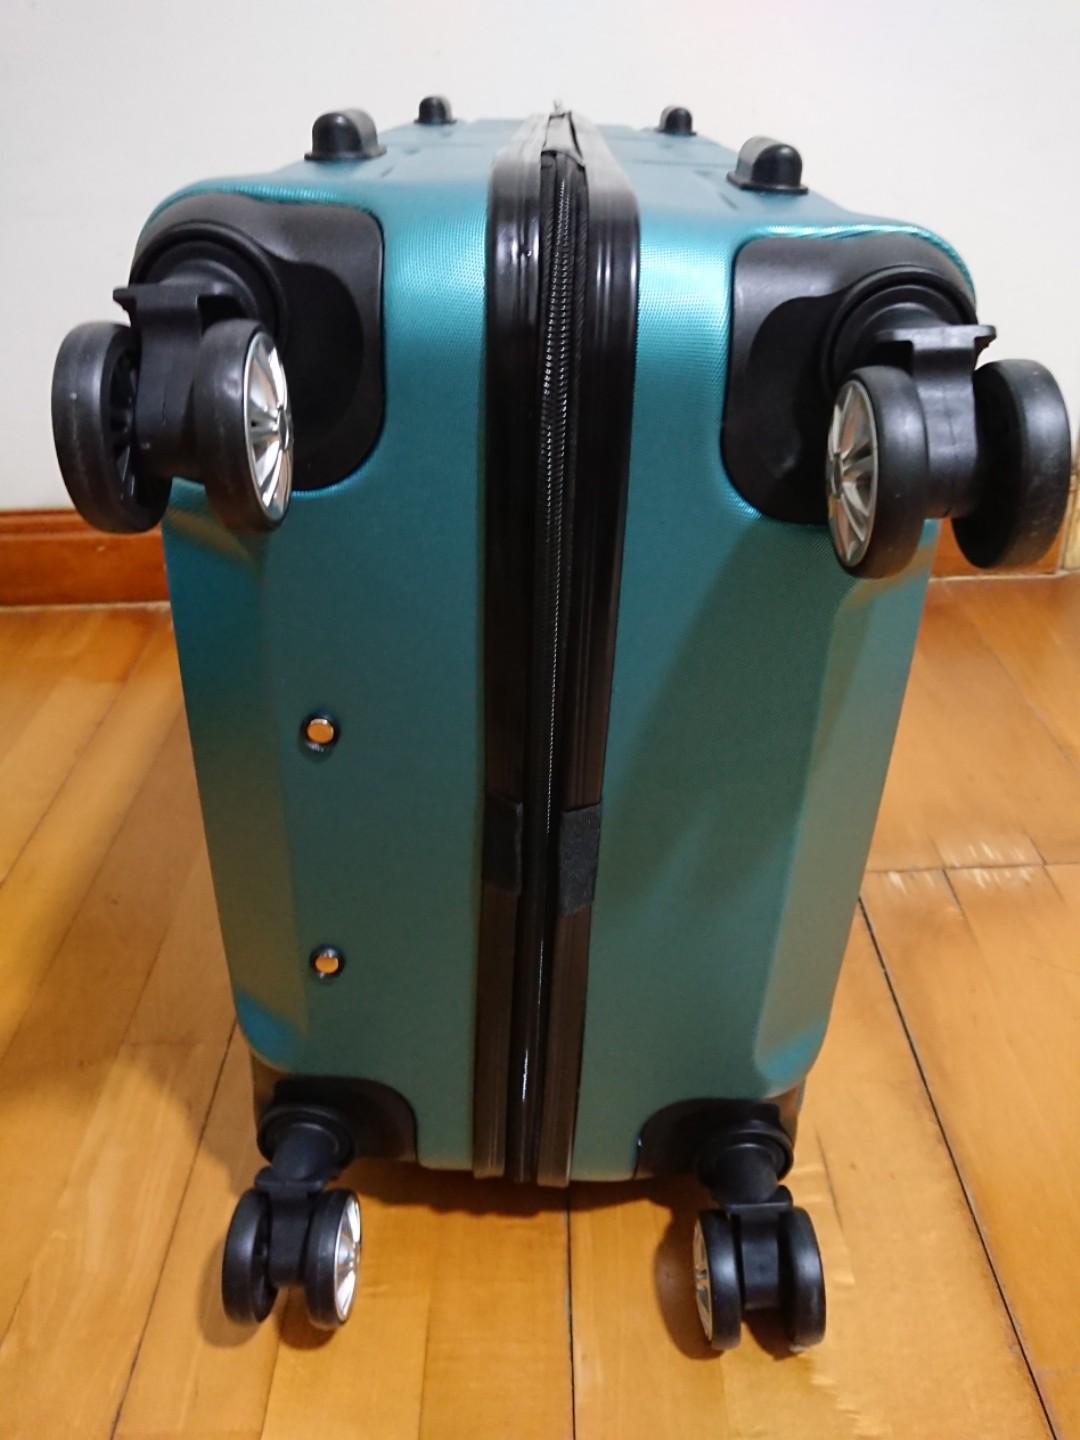 Now till 19 Jul 2022: Isetan Luggage Fair - EverydayOnSales.com